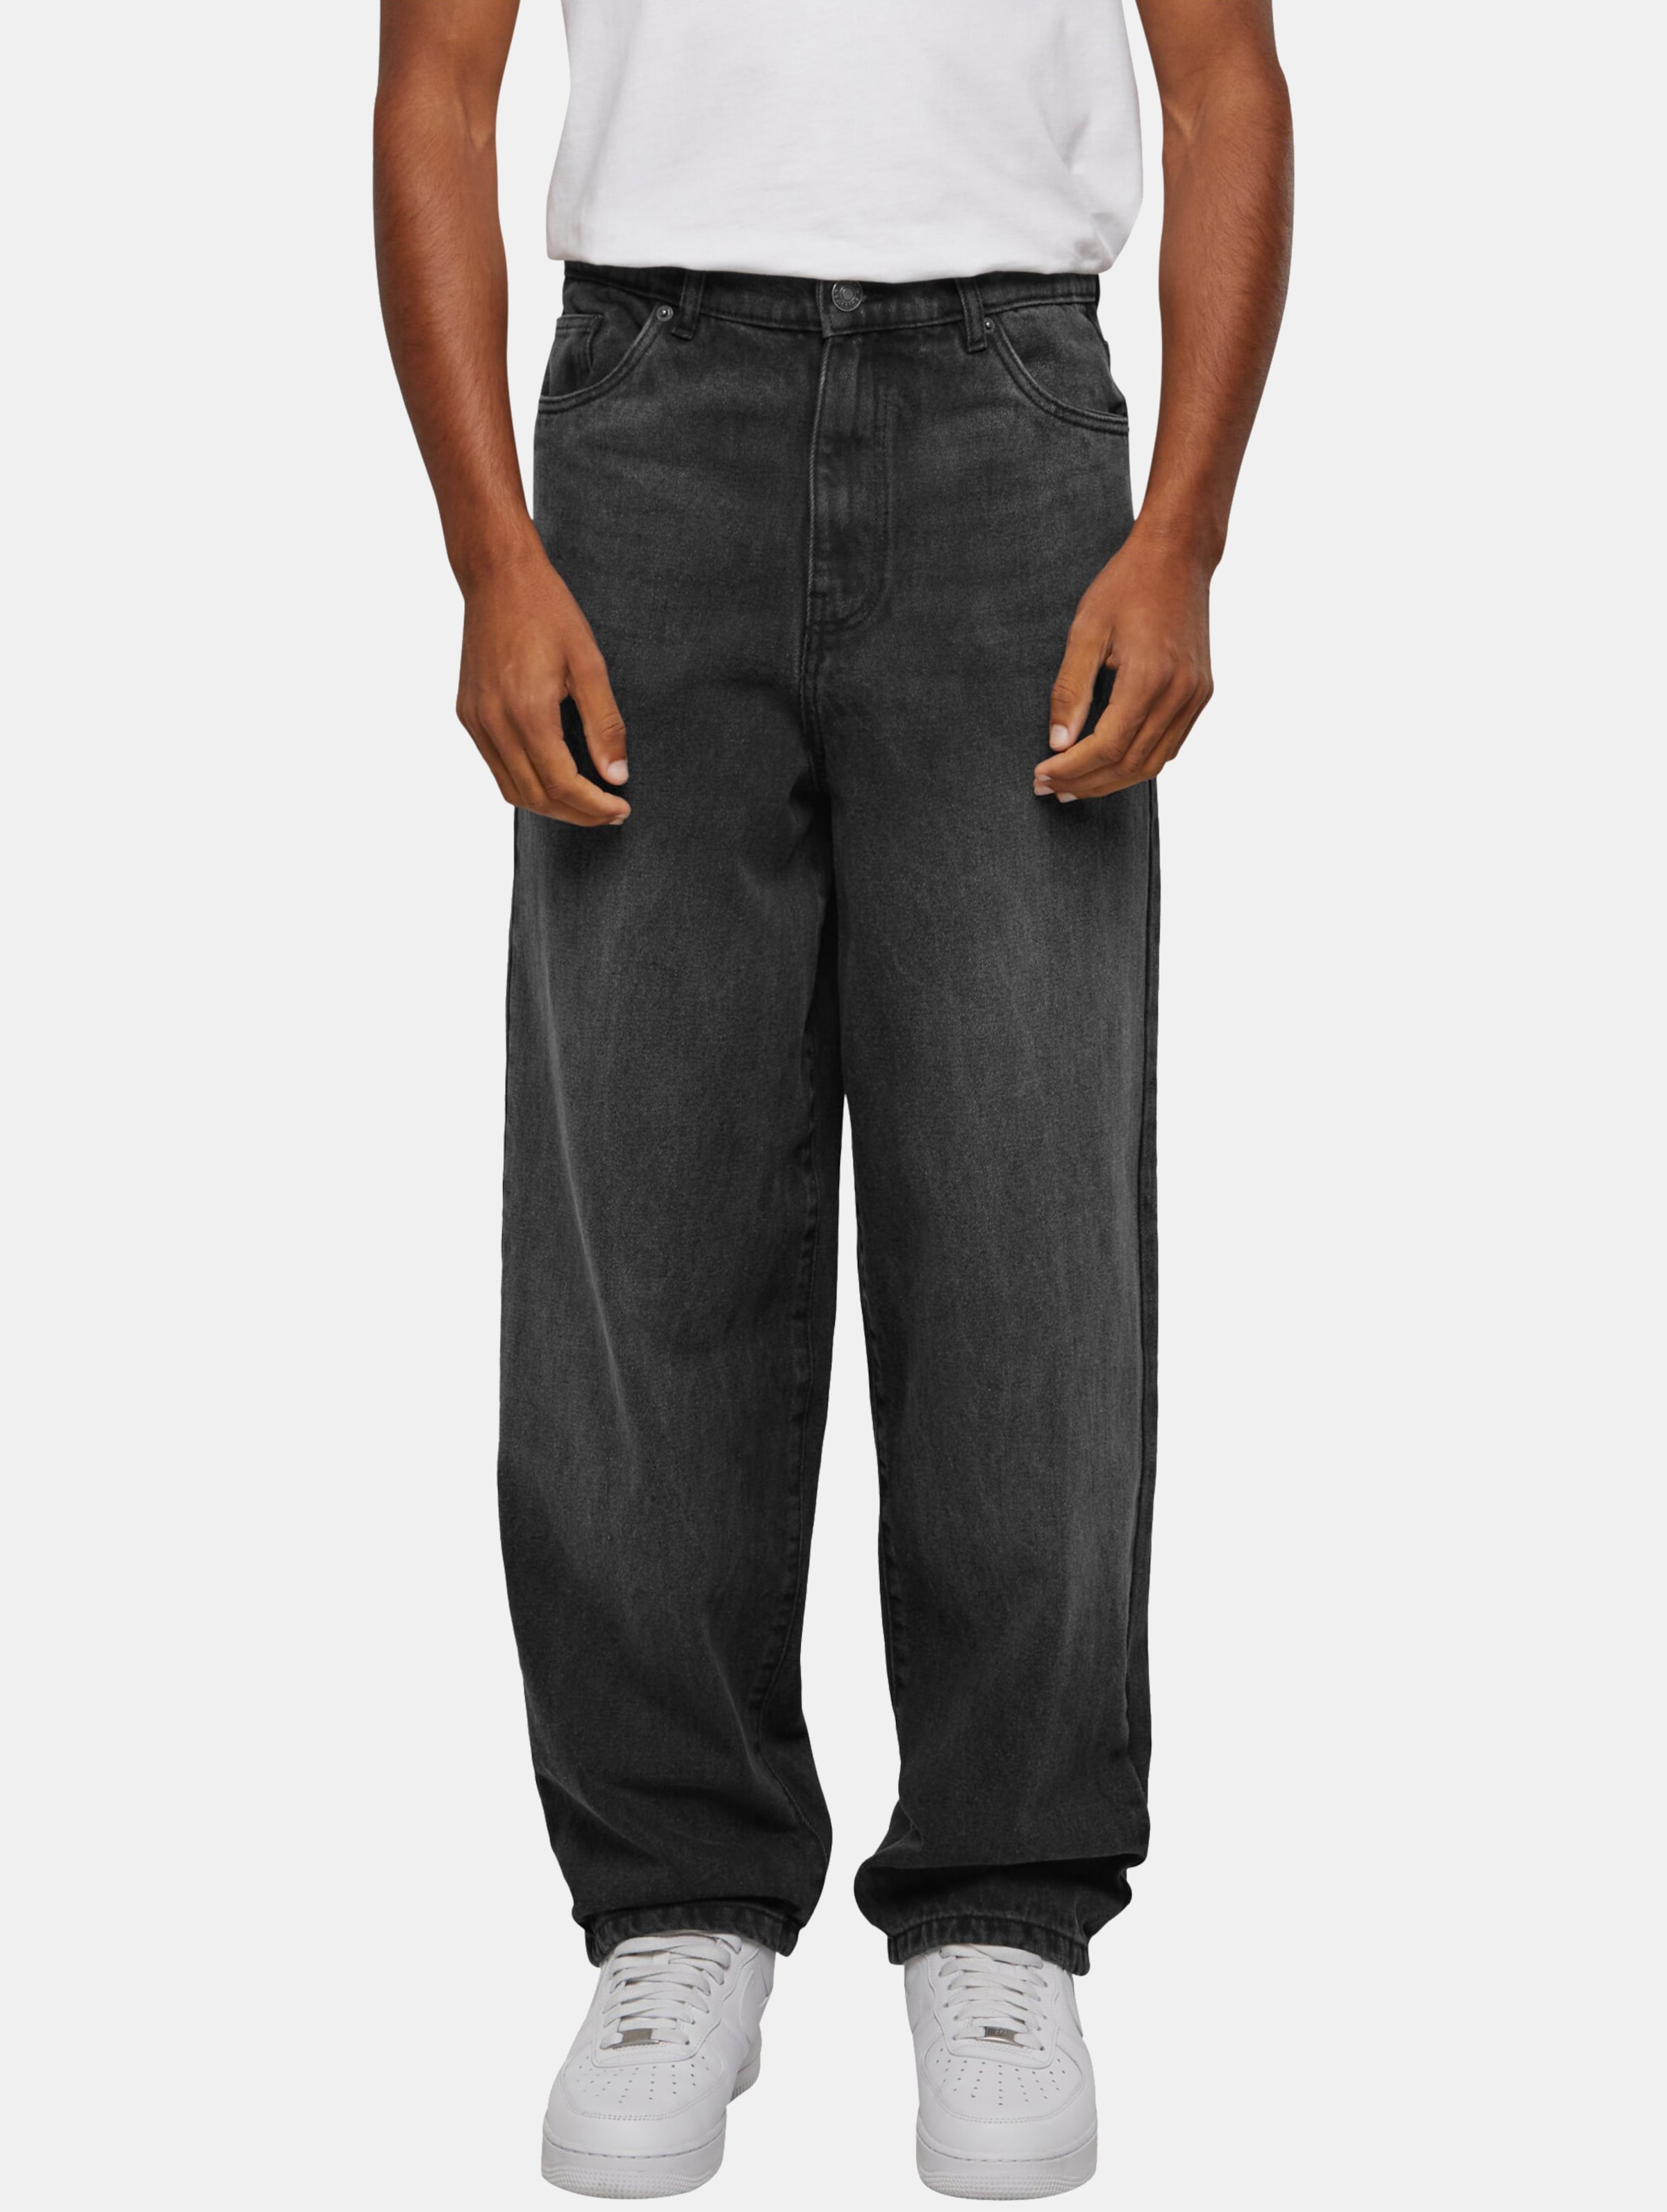 Urban Classics - Heavy Ounce Baggy Fit Jeans Wijde broek - Taille, 36 inch - Zwart